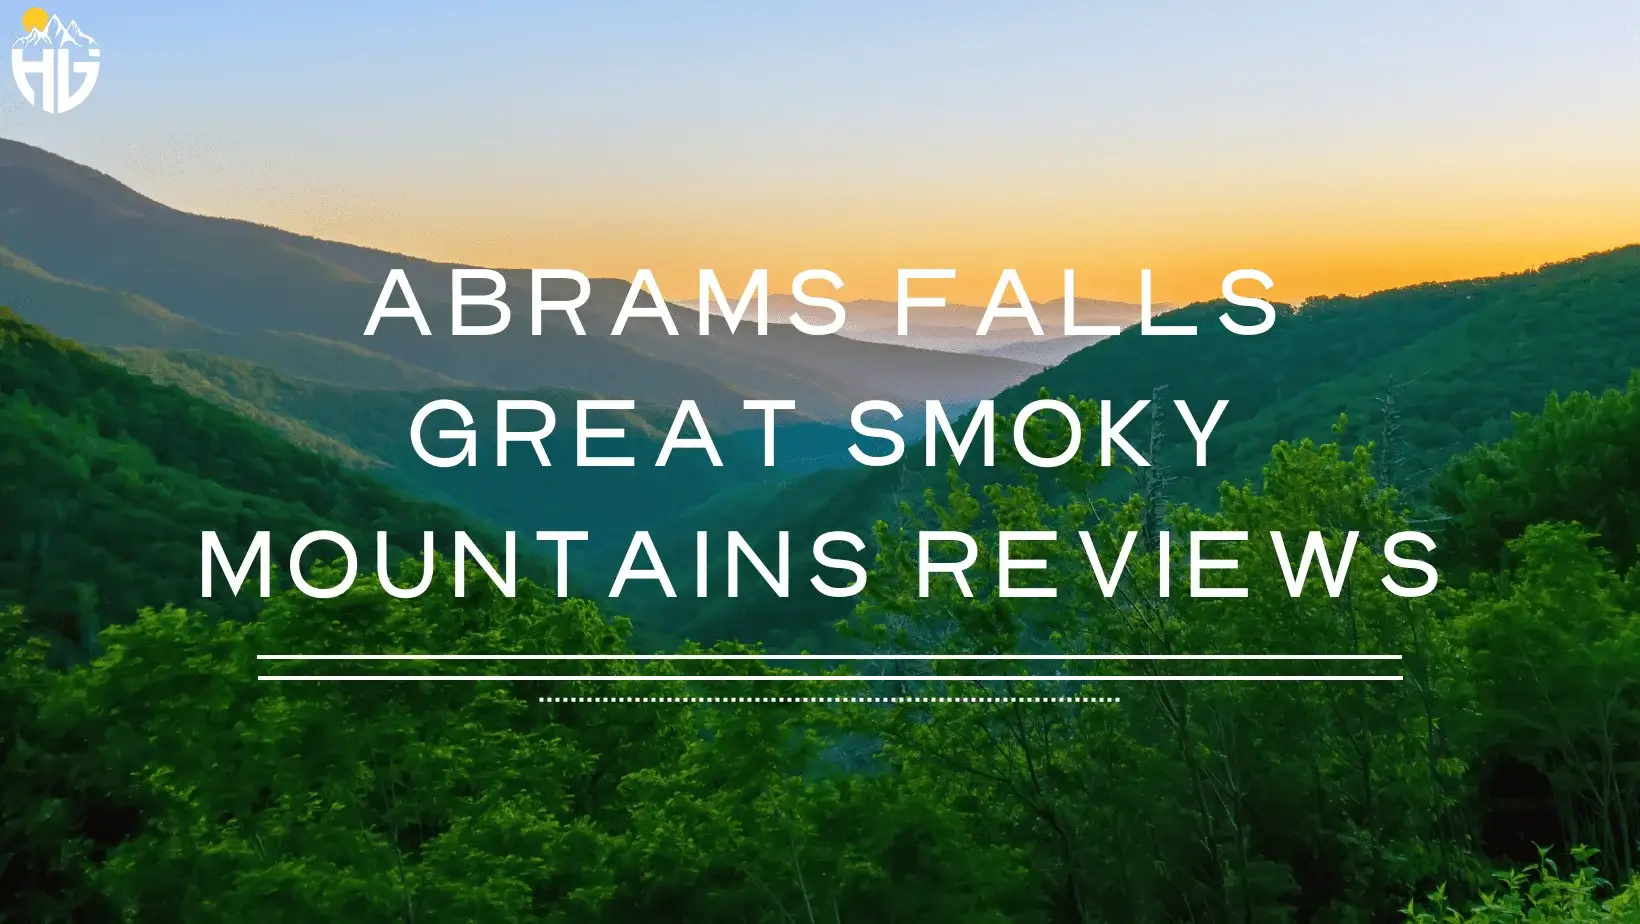 Abrams Falls Great Smoky Mountains Reviews